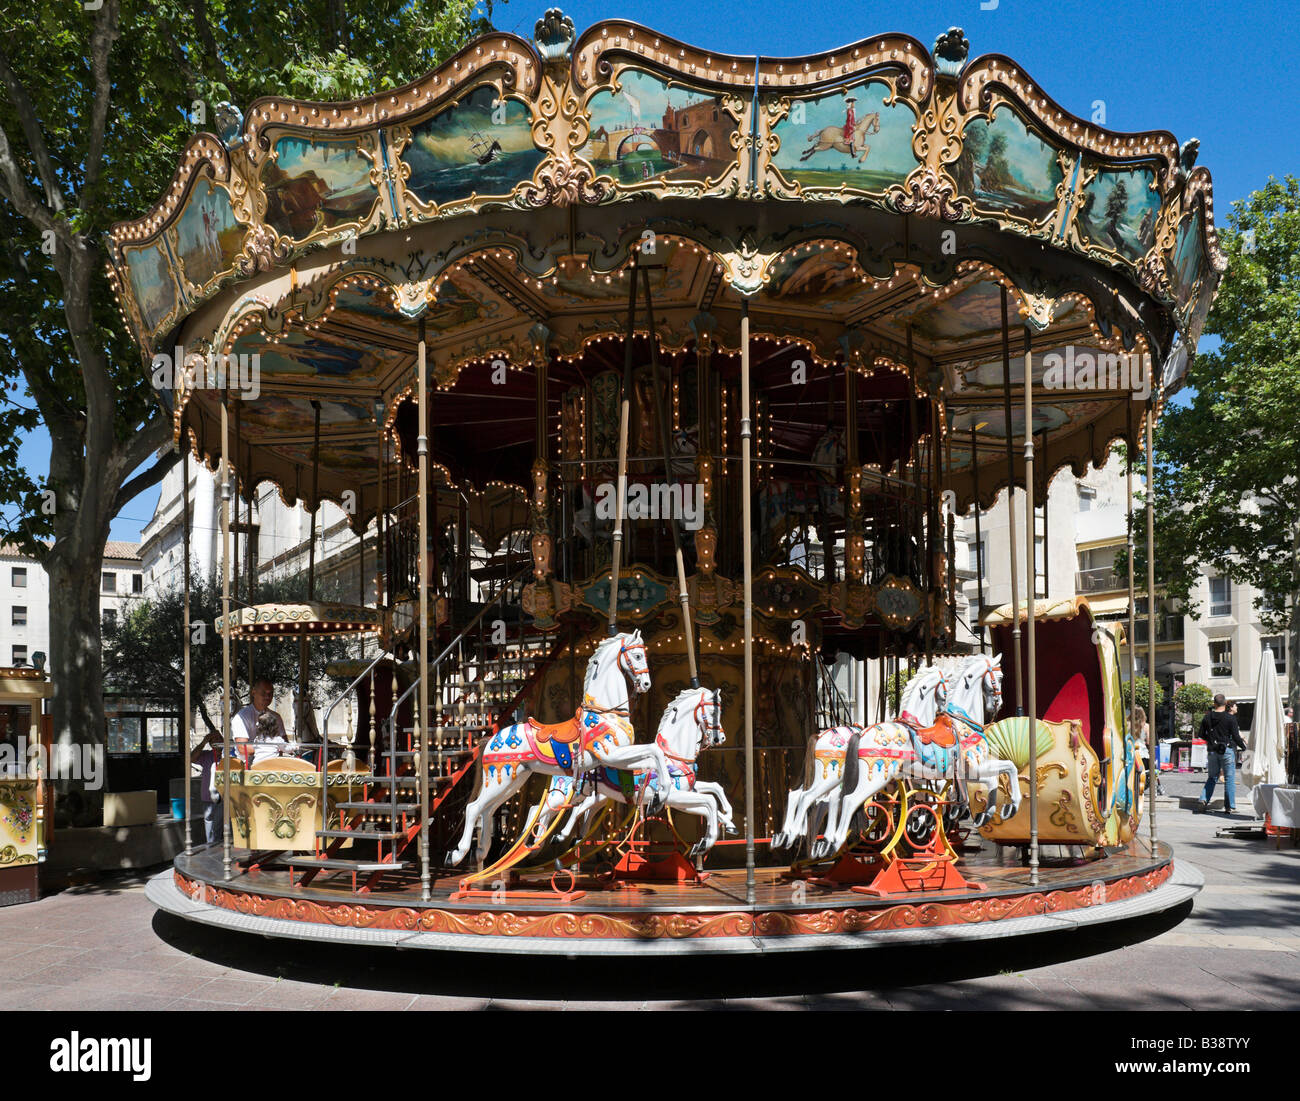 Karussell vor dem Hotel de Ville, Place d l ' Horloge, Avignon, Provence, Frankreich Stockfoto